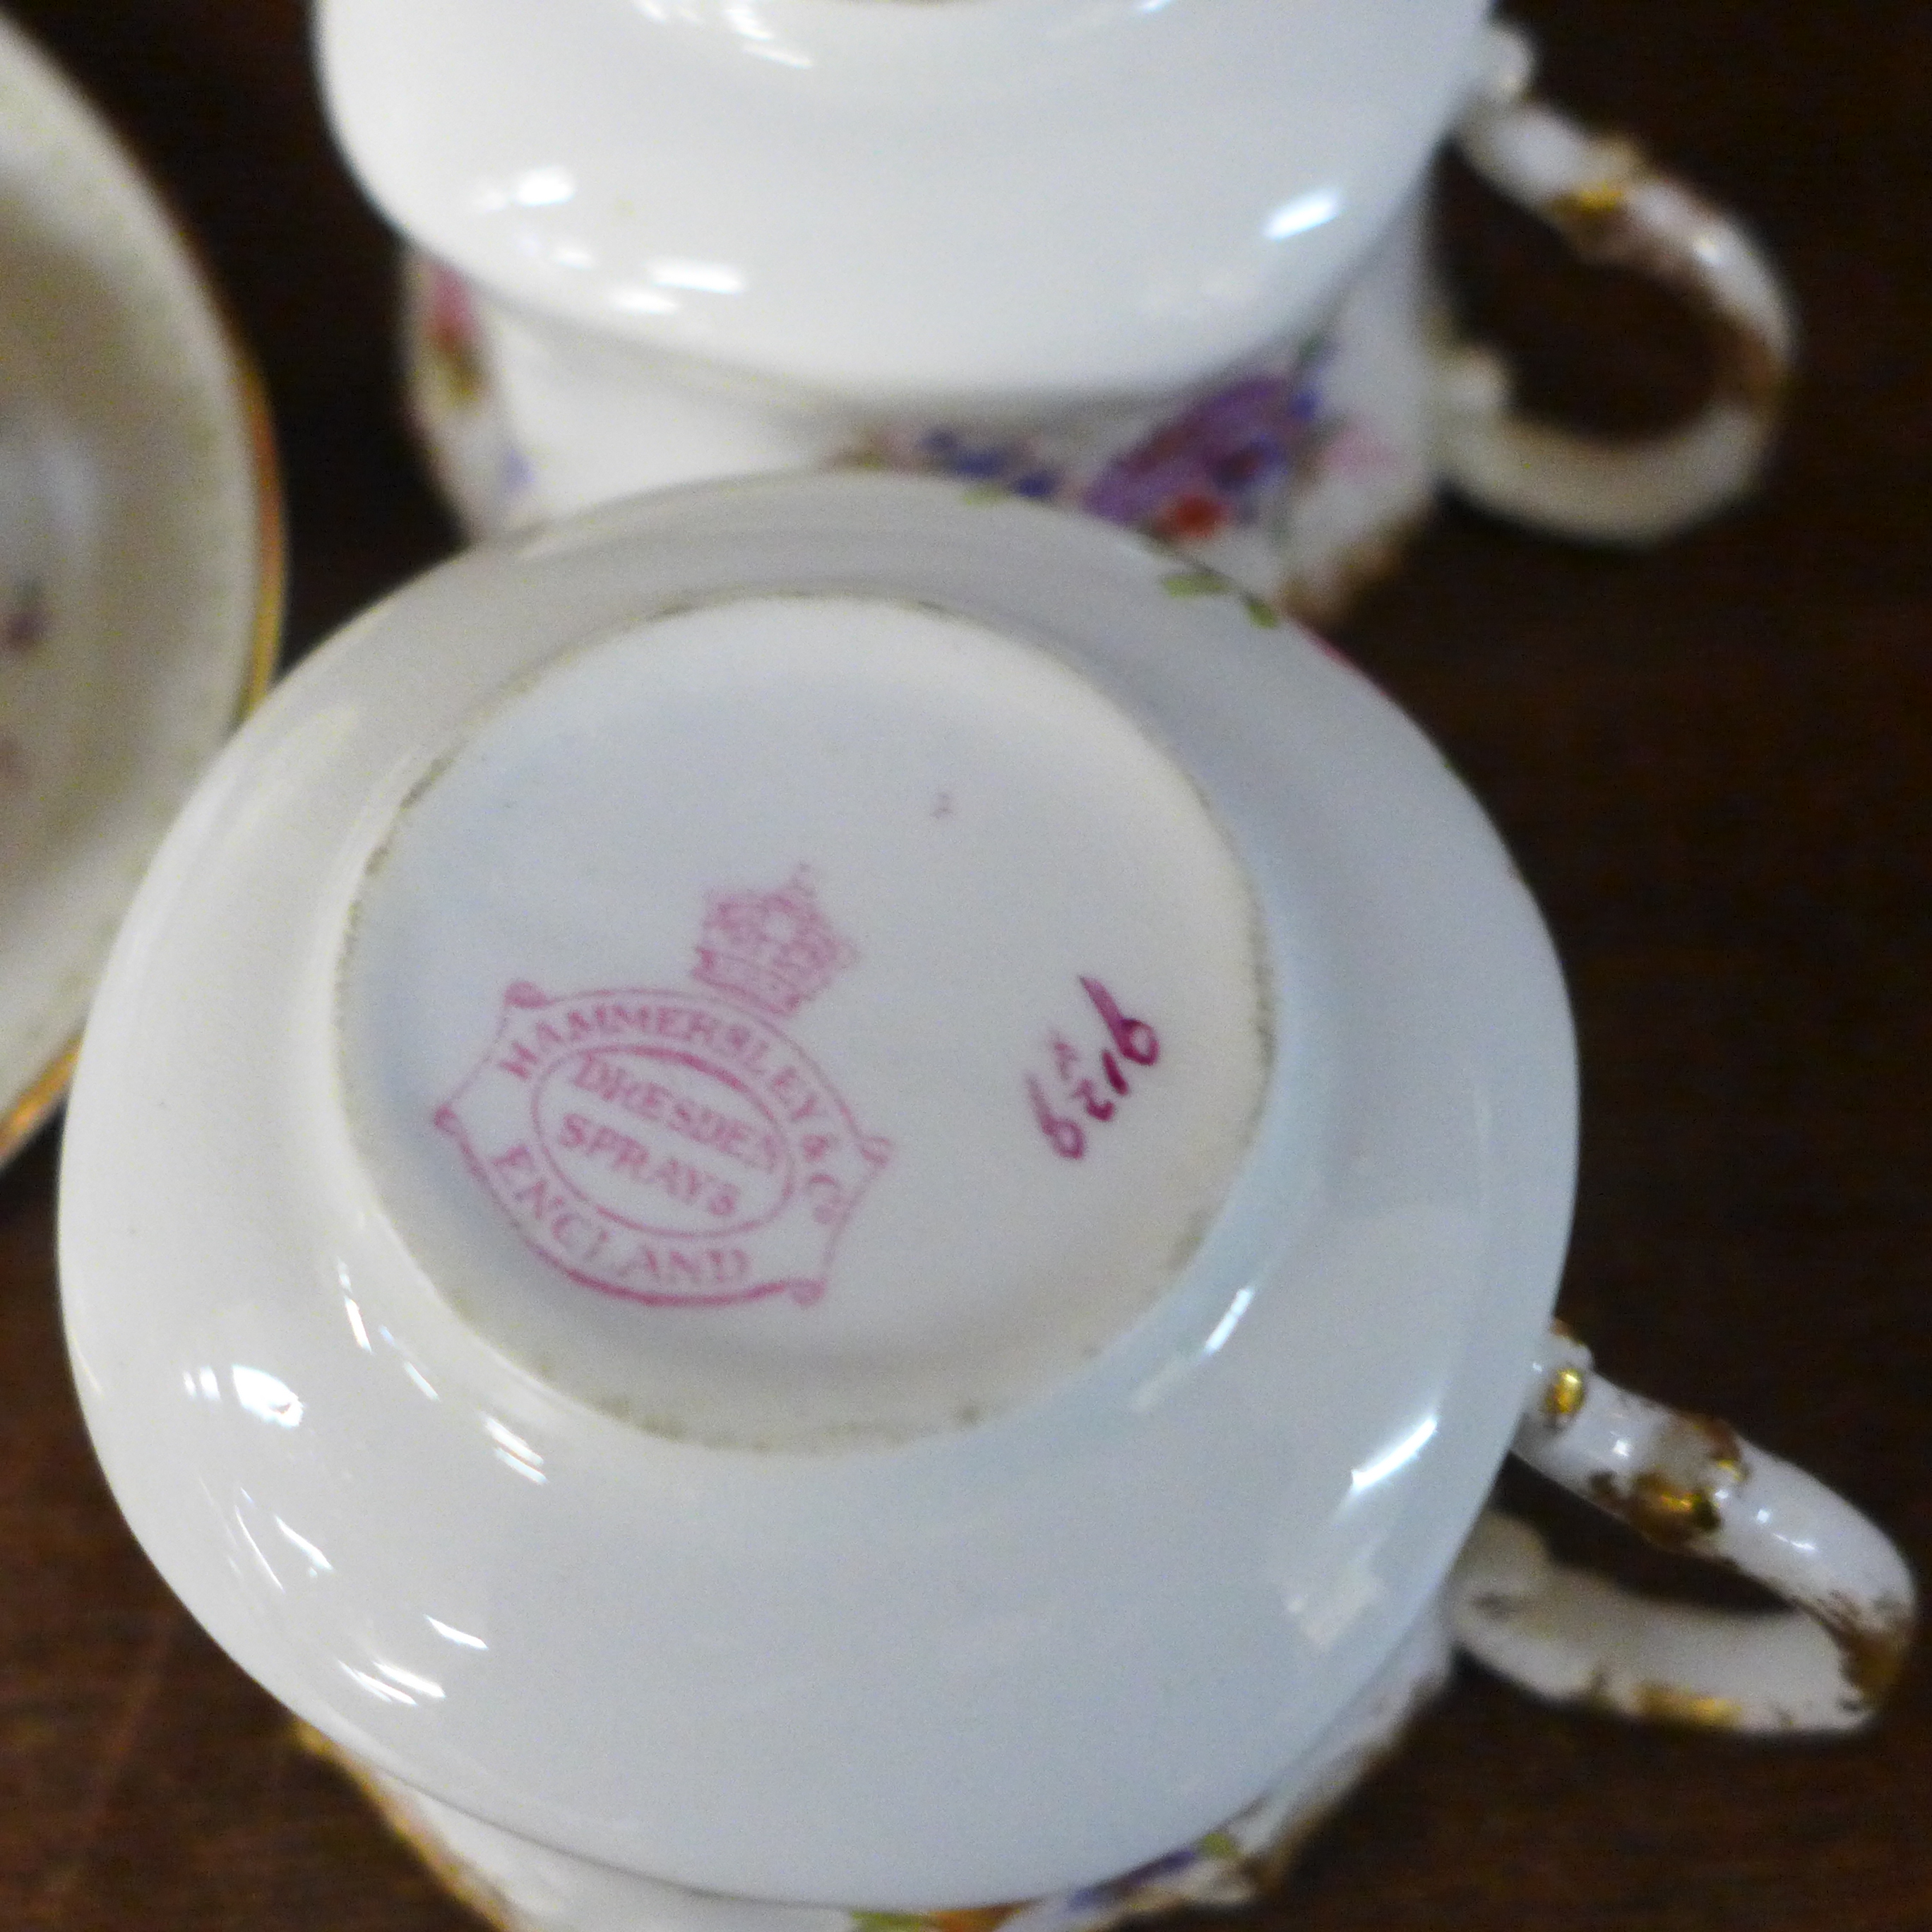 Royal Doulton Bunnykins bowl, dish, plate and mug, Spode, Wedgwood, Royal Copenhagen and Royal - Image 7 of 7